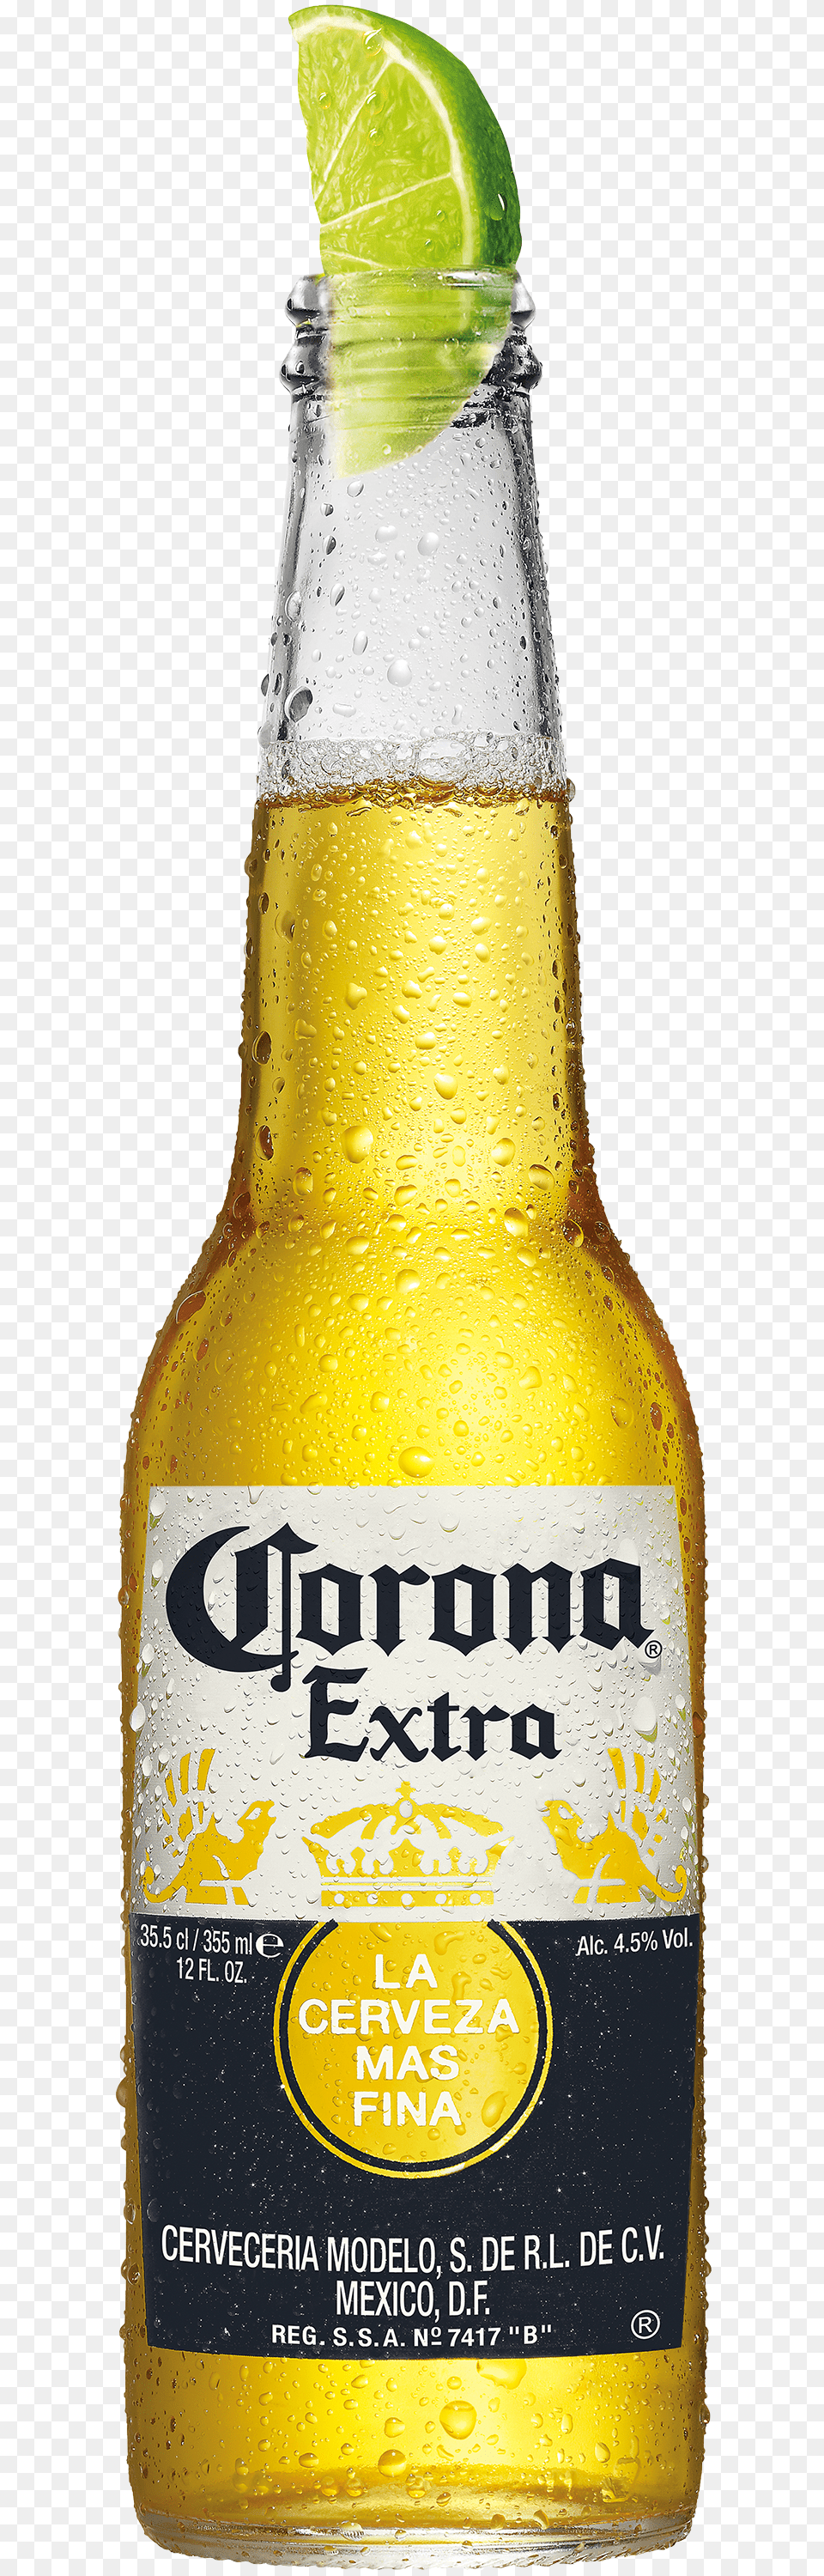 Corona Extra Corona Beer Corona Extra, Alcohol, Beer Bottle, Beverage, Bottle Free Transparent Png